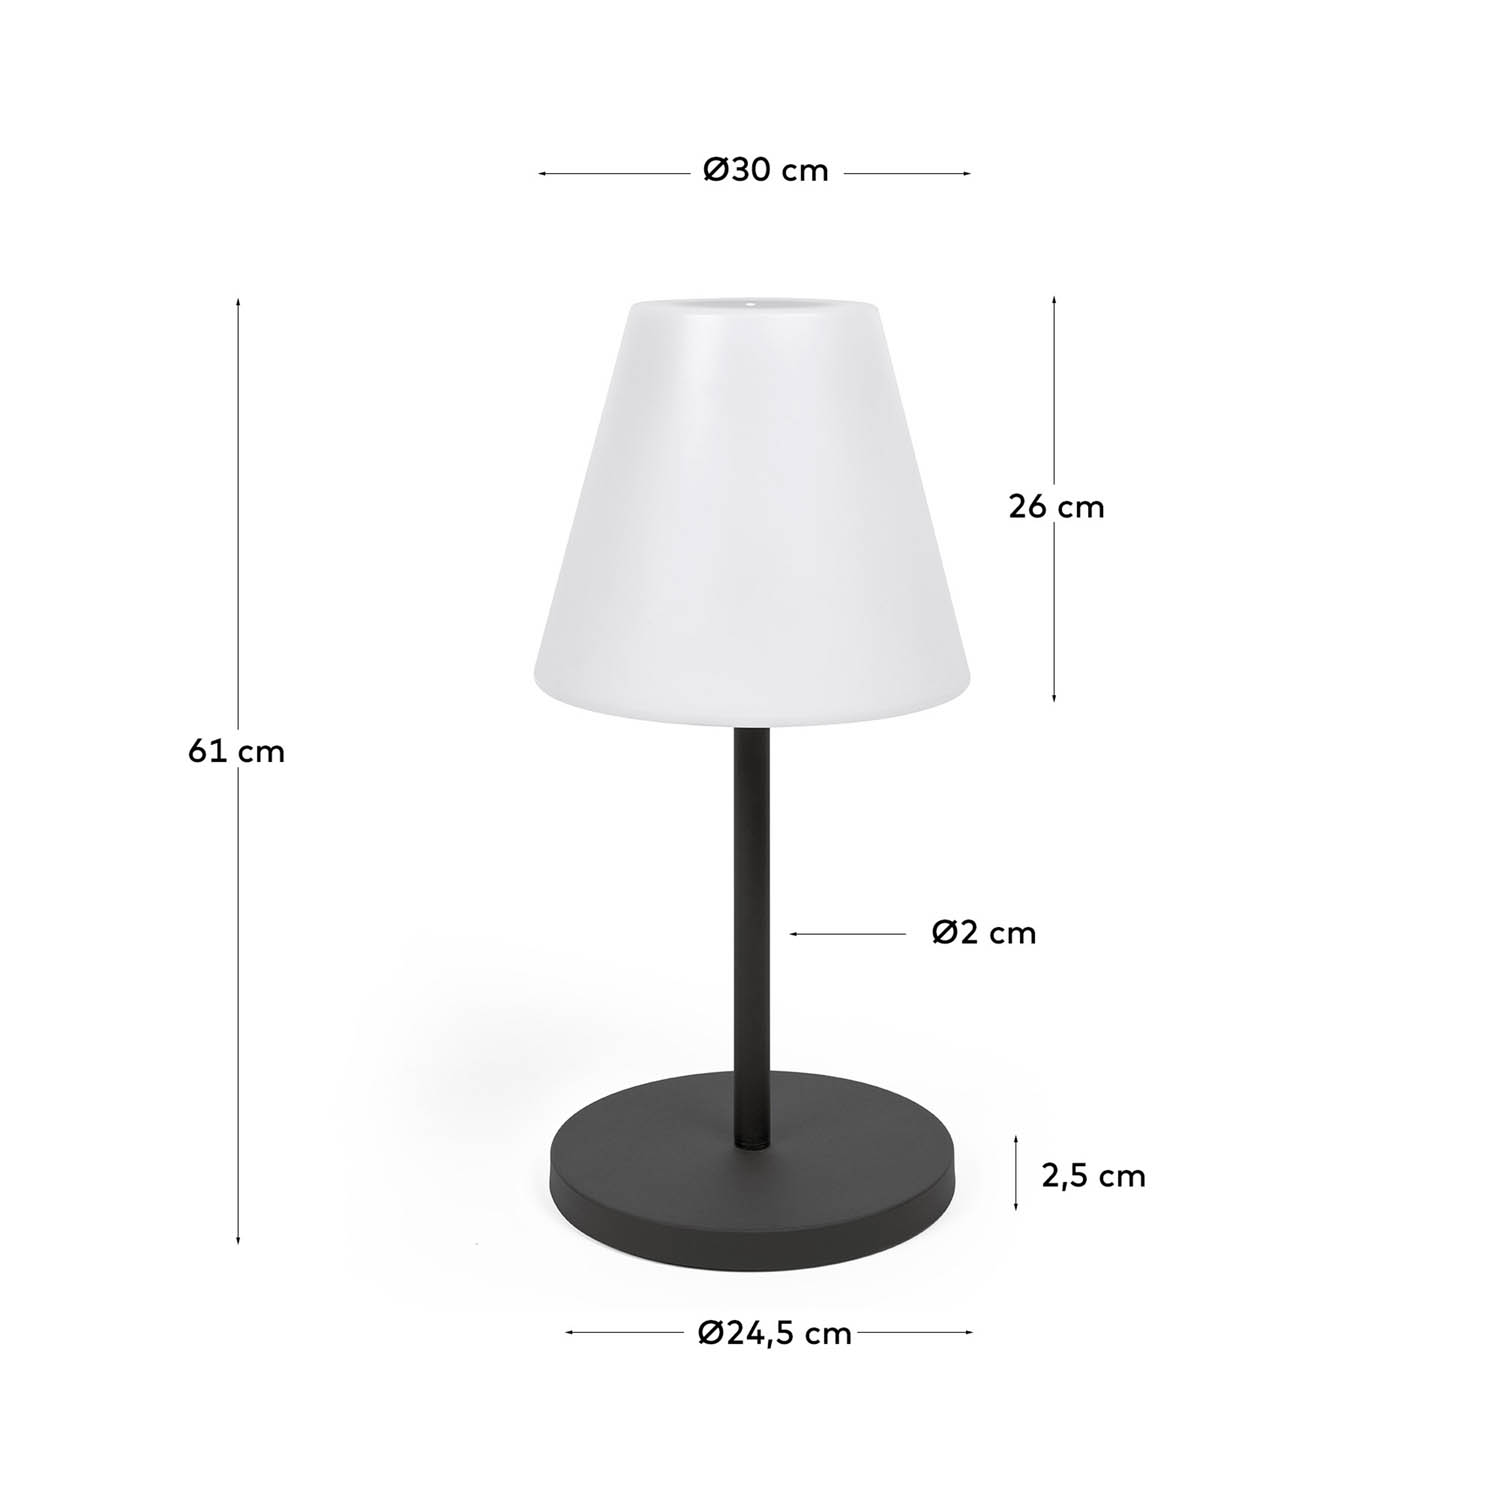 LAFORMA Amaray bordlampe - hvid polyethylen og sort stål